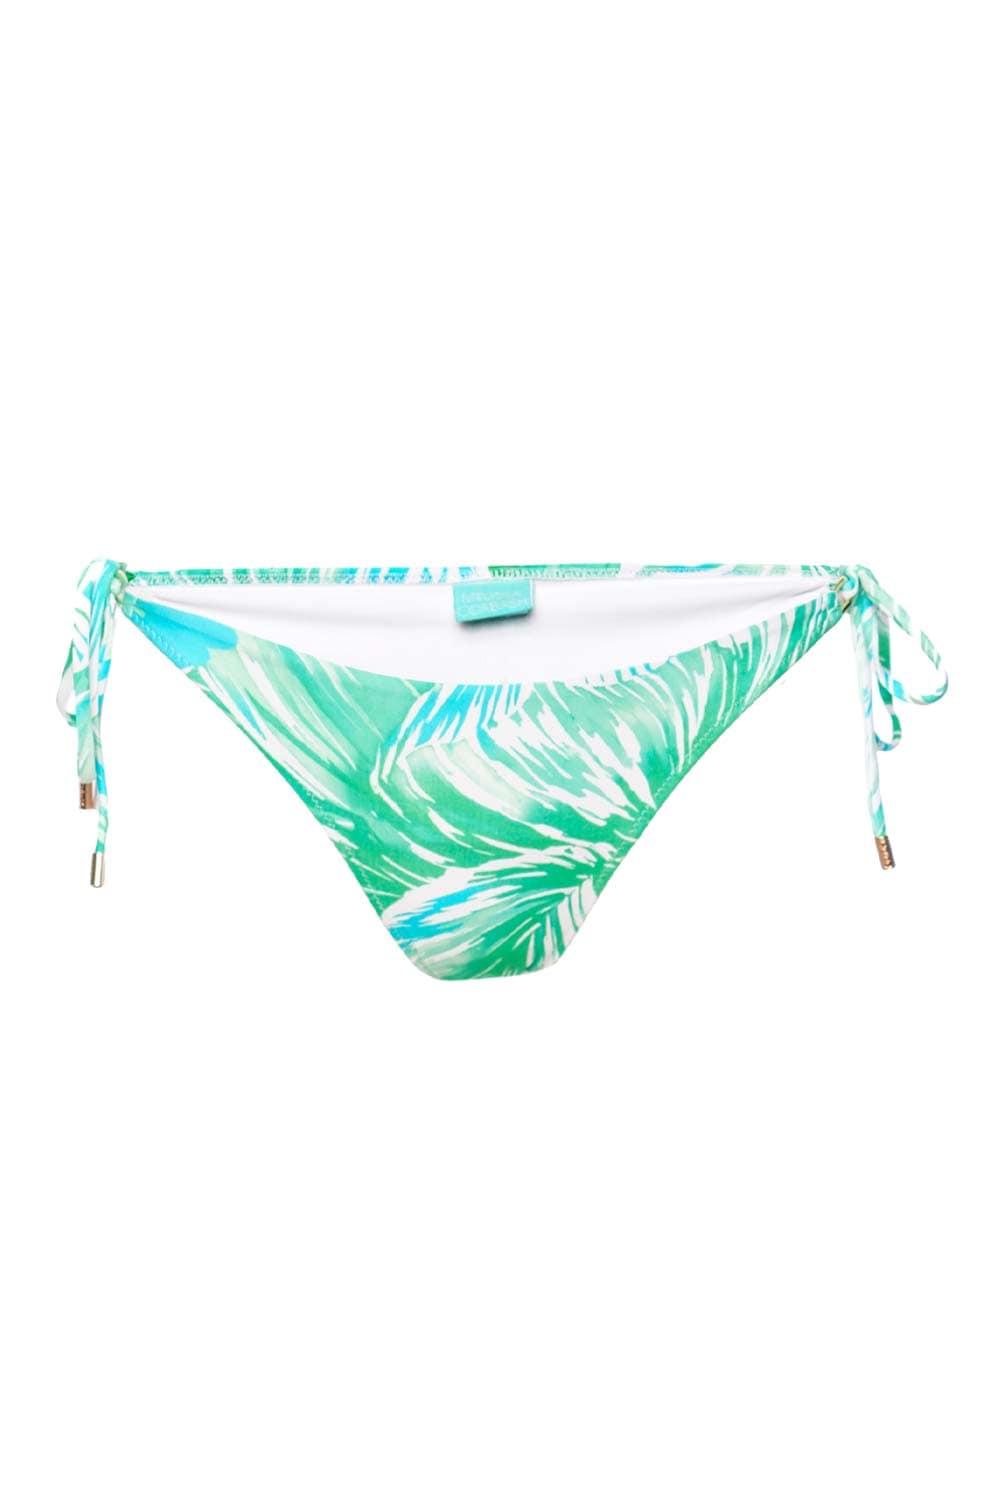 Melissa Odabash Cancun Rainforest Side Tie Bikini Bottom